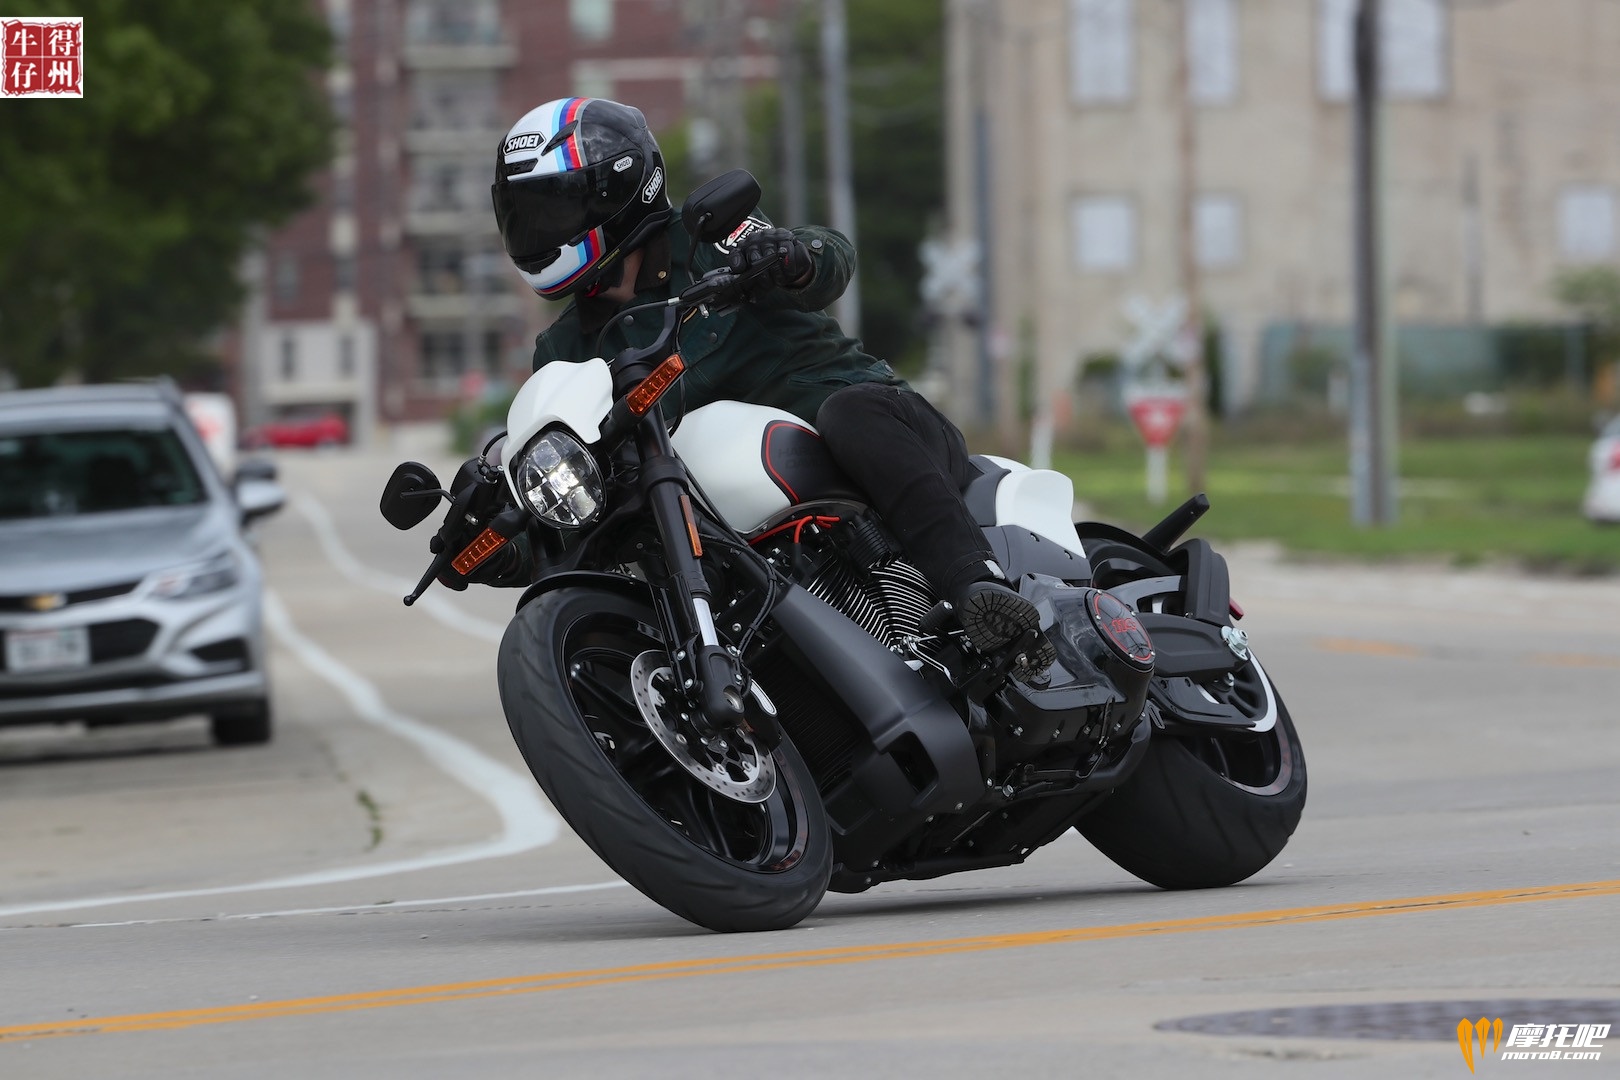 2019-Harley-Davidson-fxdr-114-review-power-cruiser-motorcycle-8.jpg